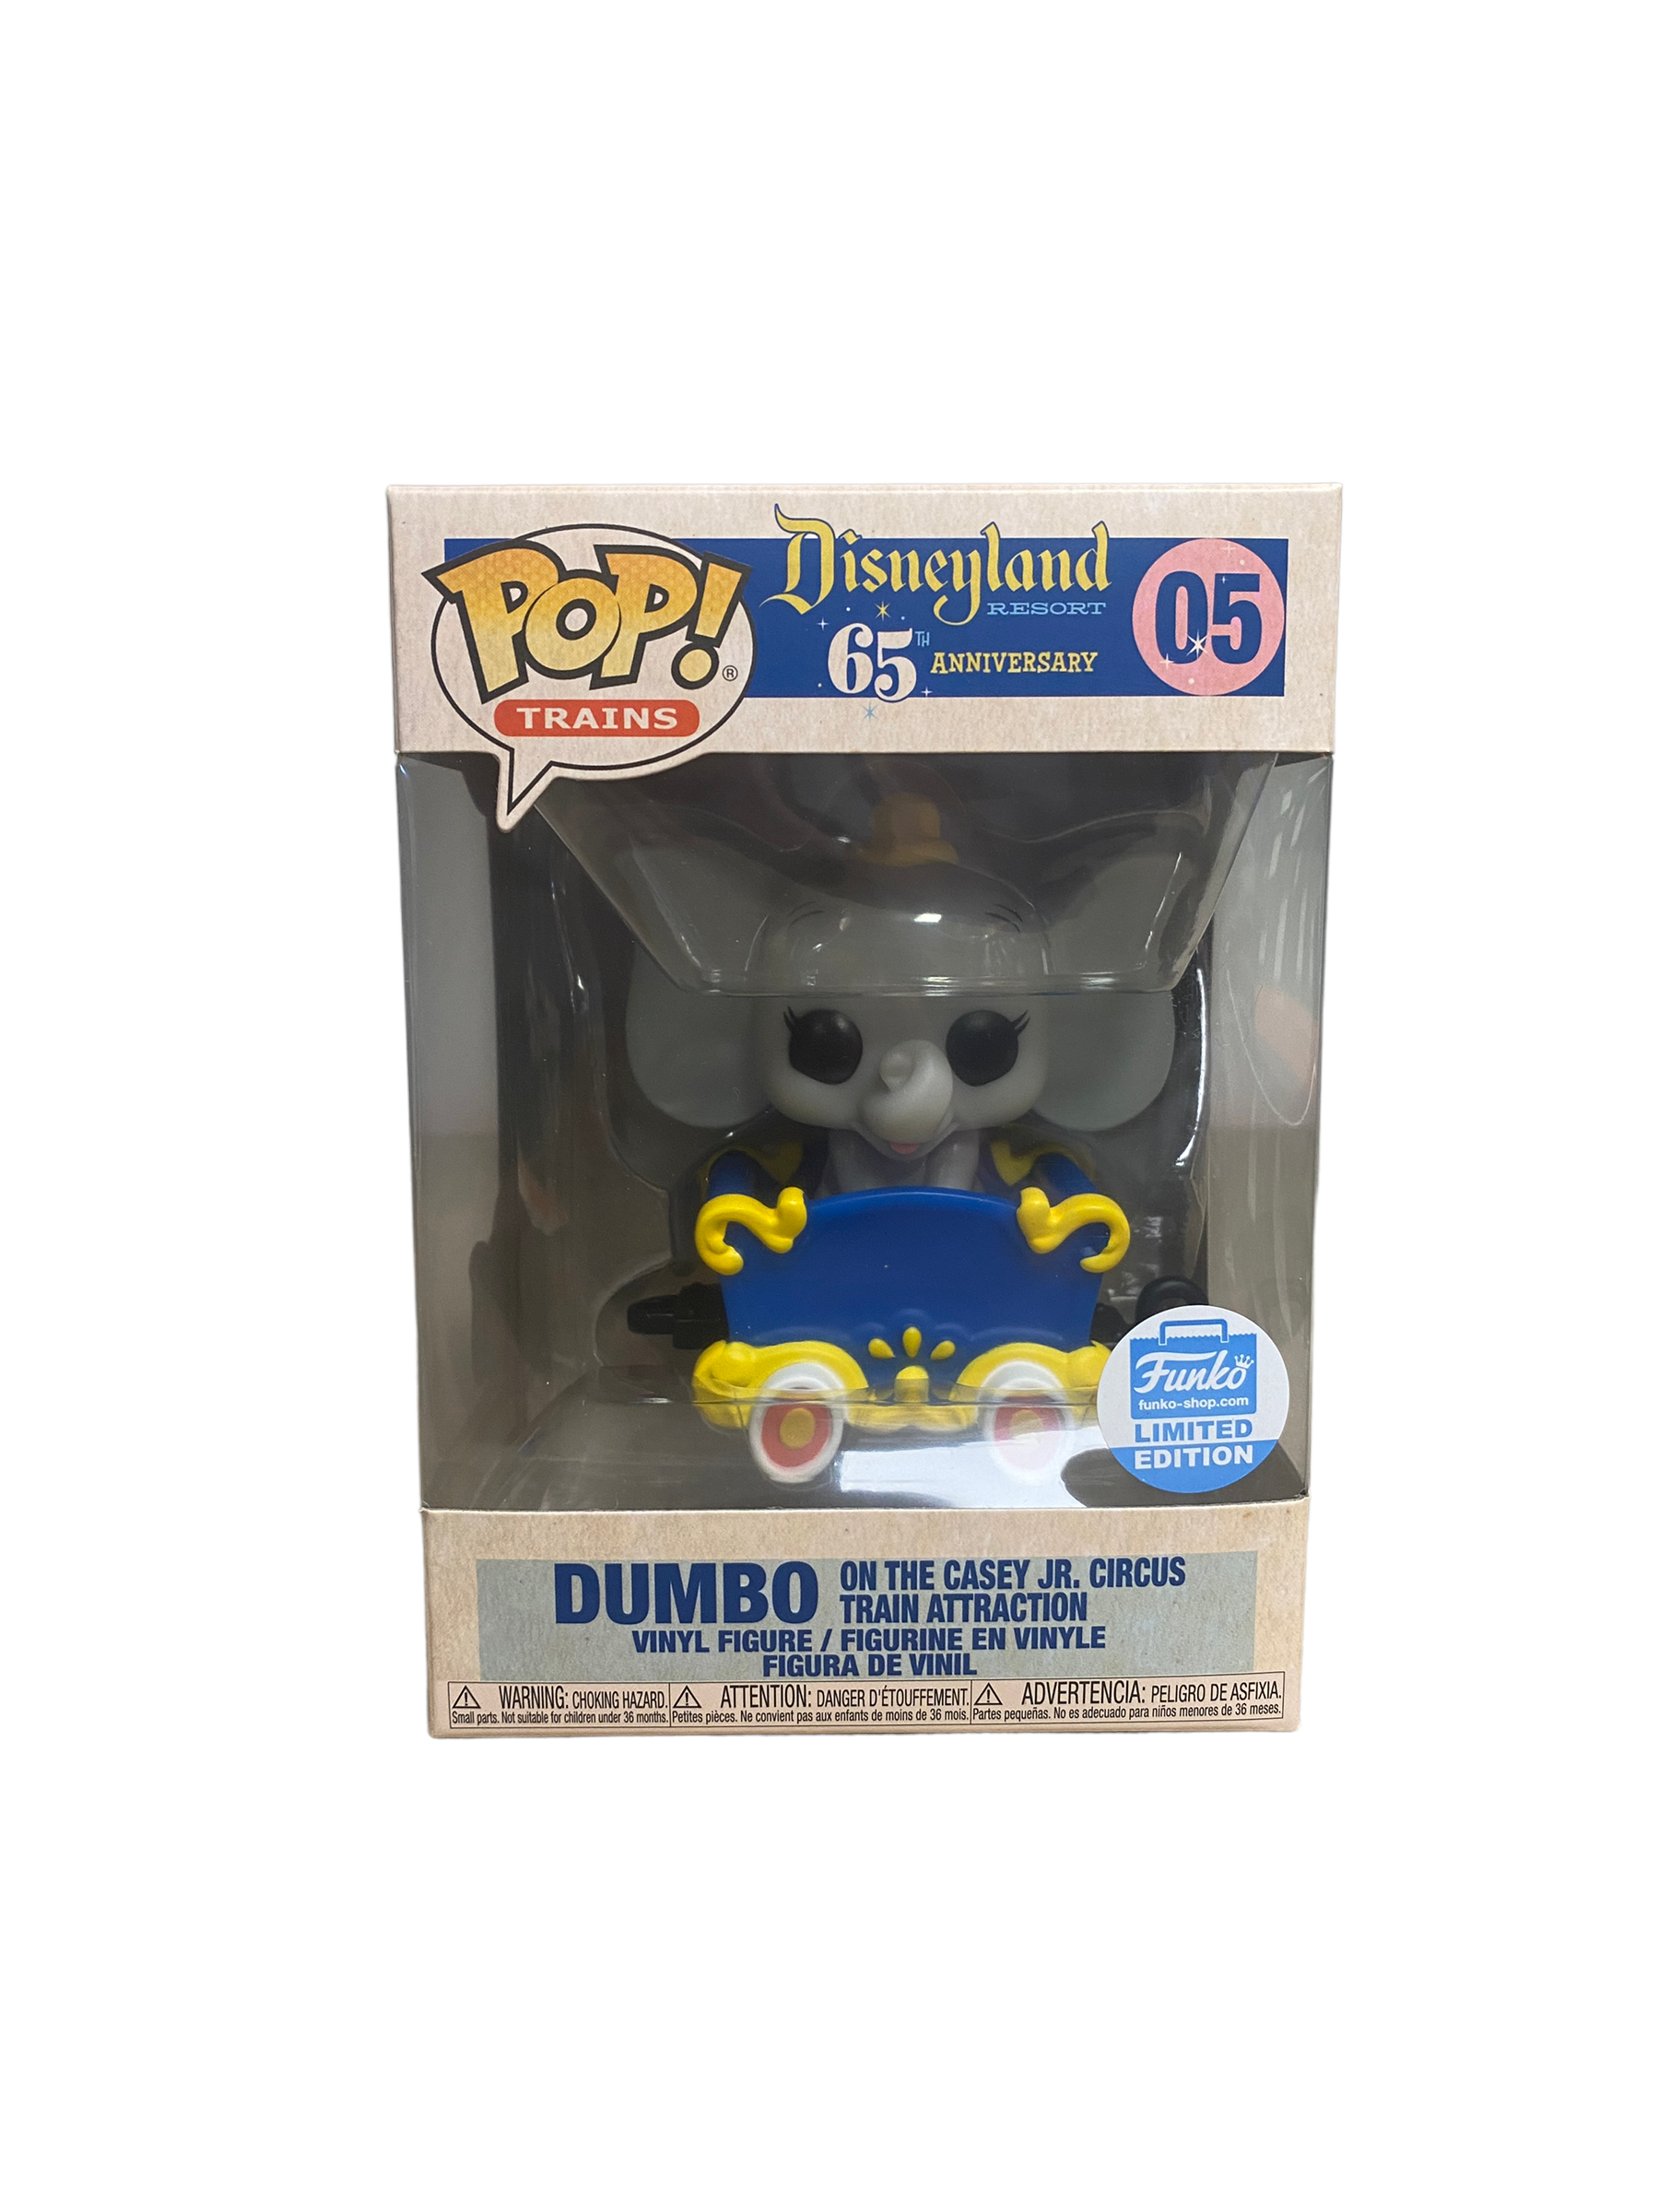 Dumbo On The Casey Jr. Circus Train Attraction #05 Funko Pop! - Disneyland Resort 65th Anniversary - Funko Shop Exclusive - Condition 9.5/10